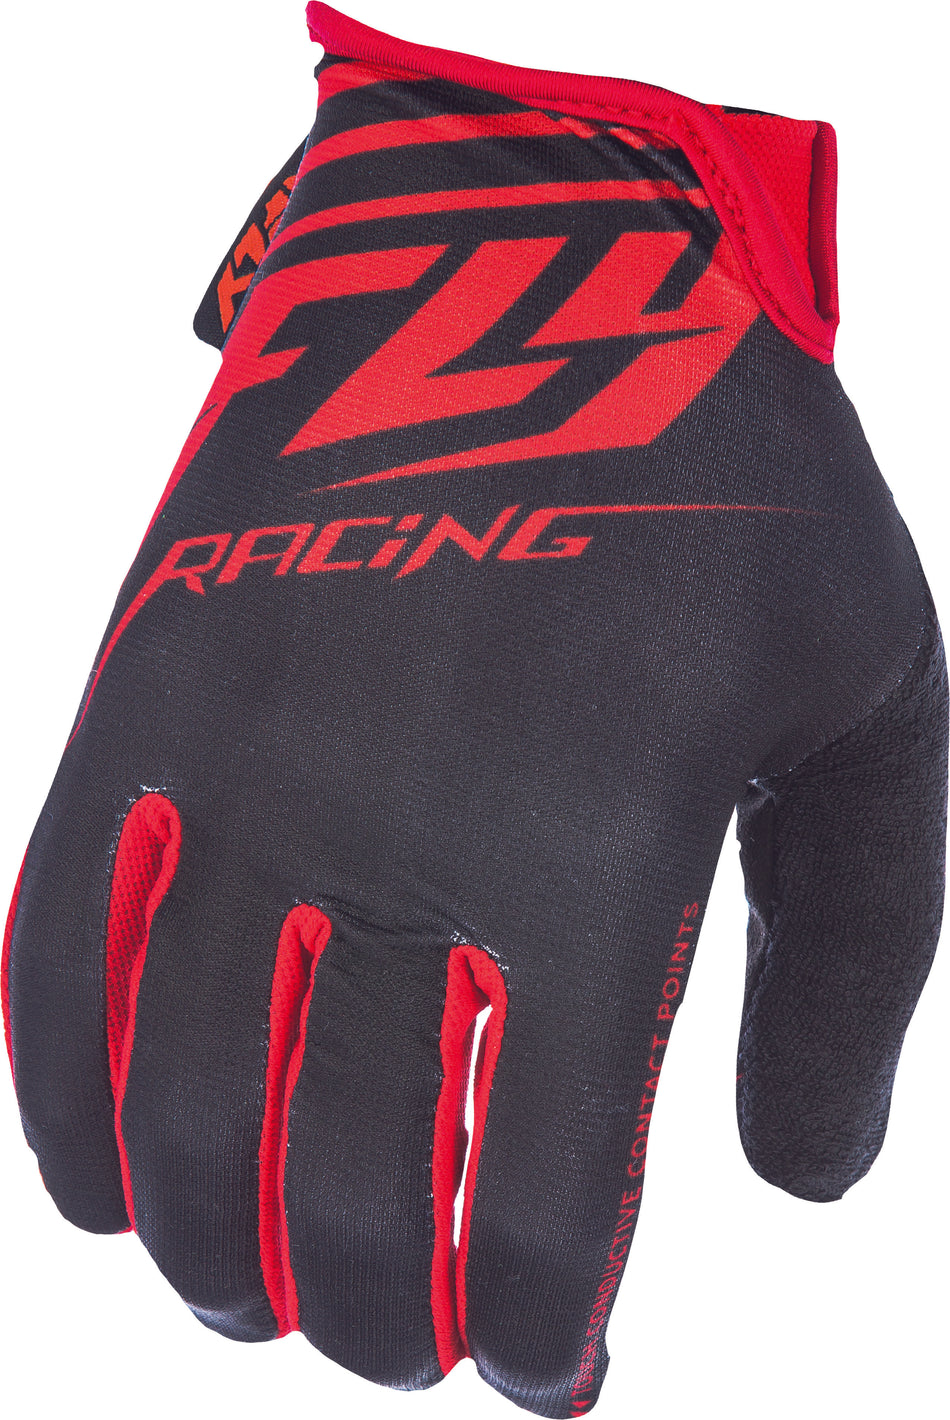 FLY RACING Media Gloves Black/Red Sz 13 350-07213